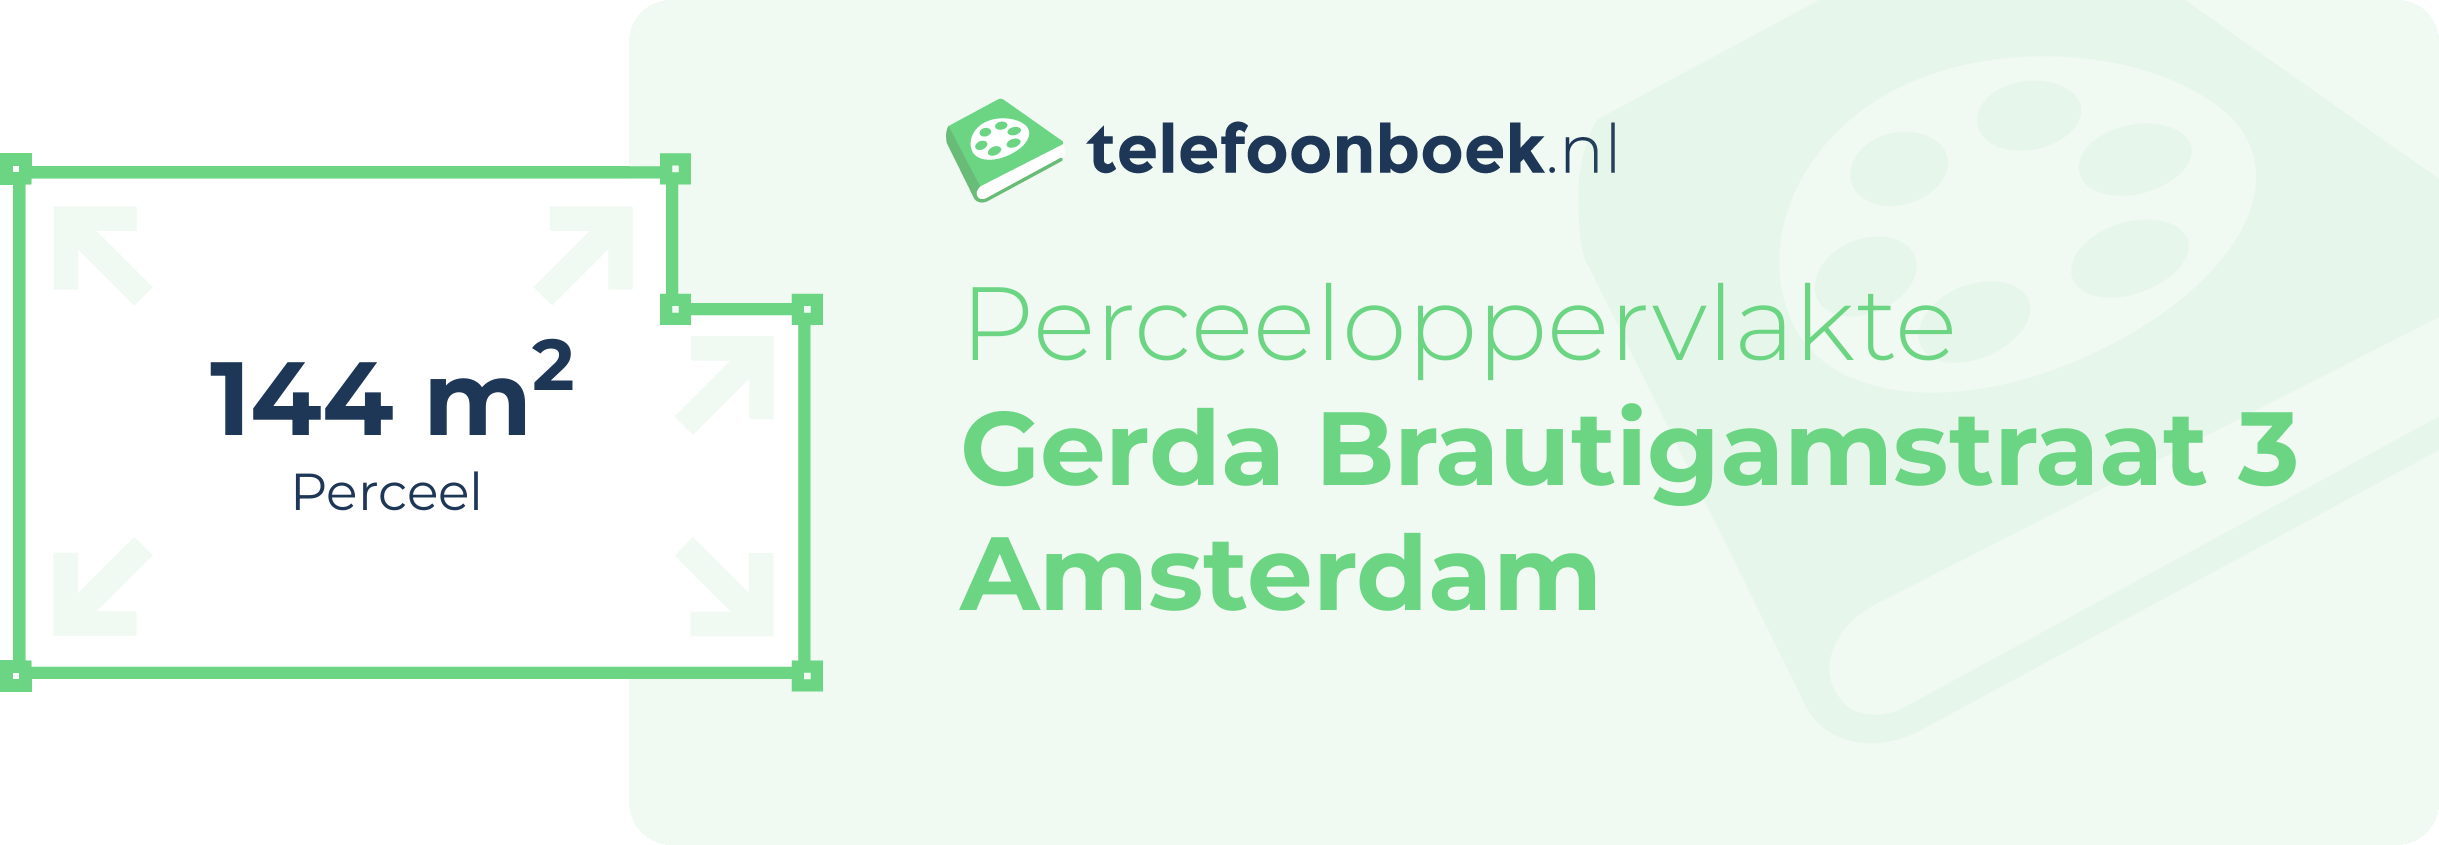 Perceeloppervlakte Gerda Brautigamstraat 3 Amsterdam